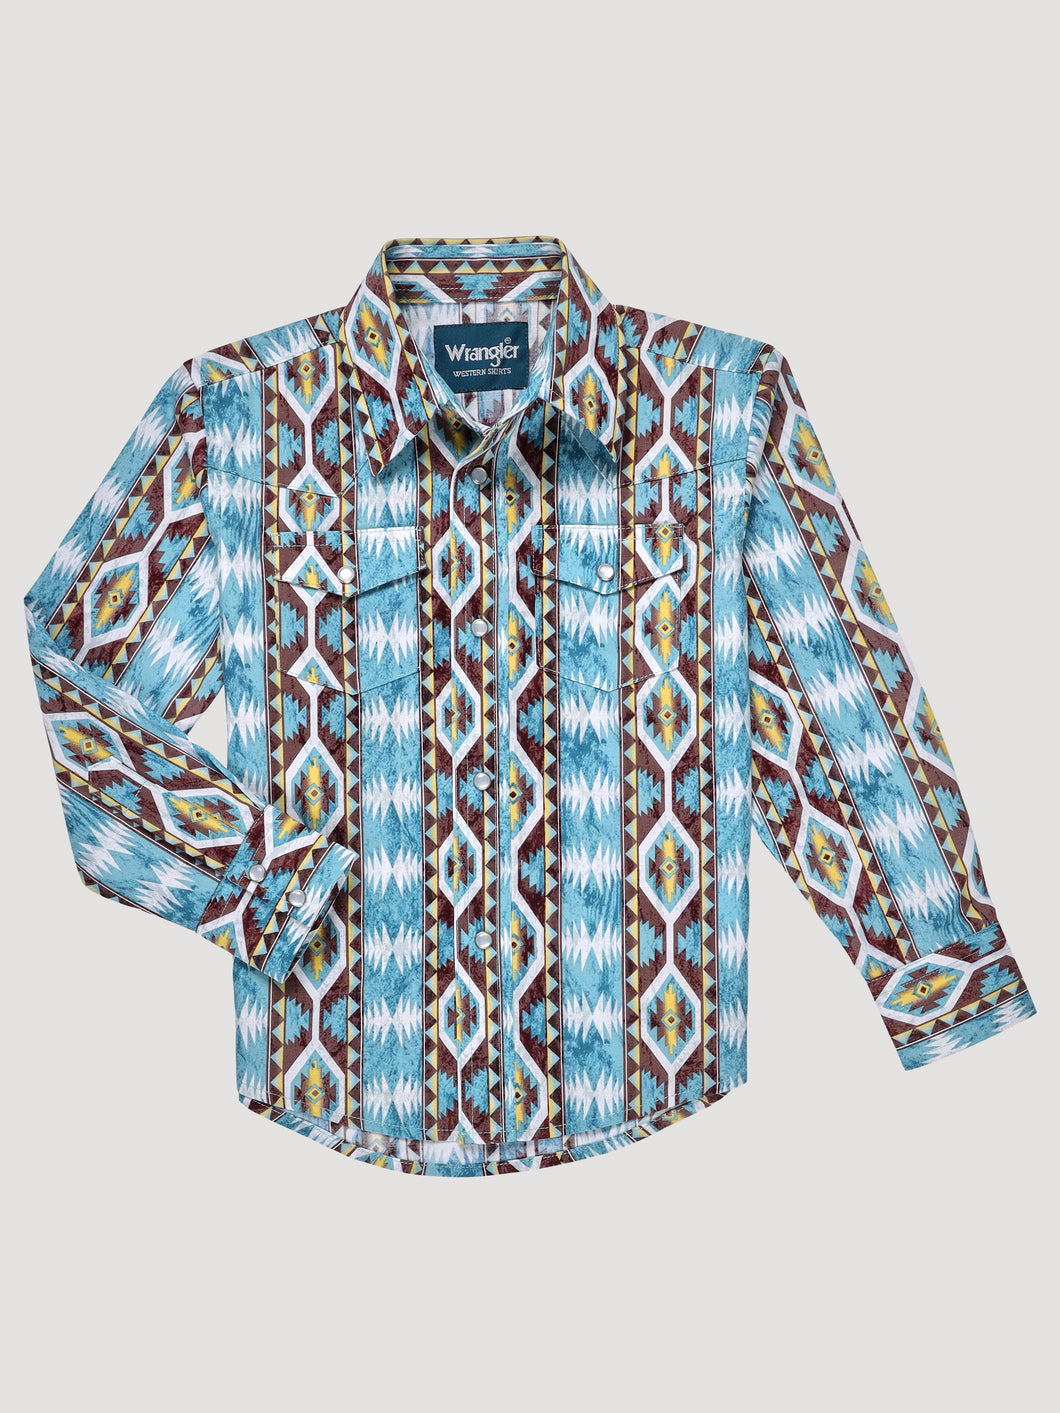 Pard's Western Shop Wrangler Boys Checotah Multi Aztec Print Snap Western Shirt